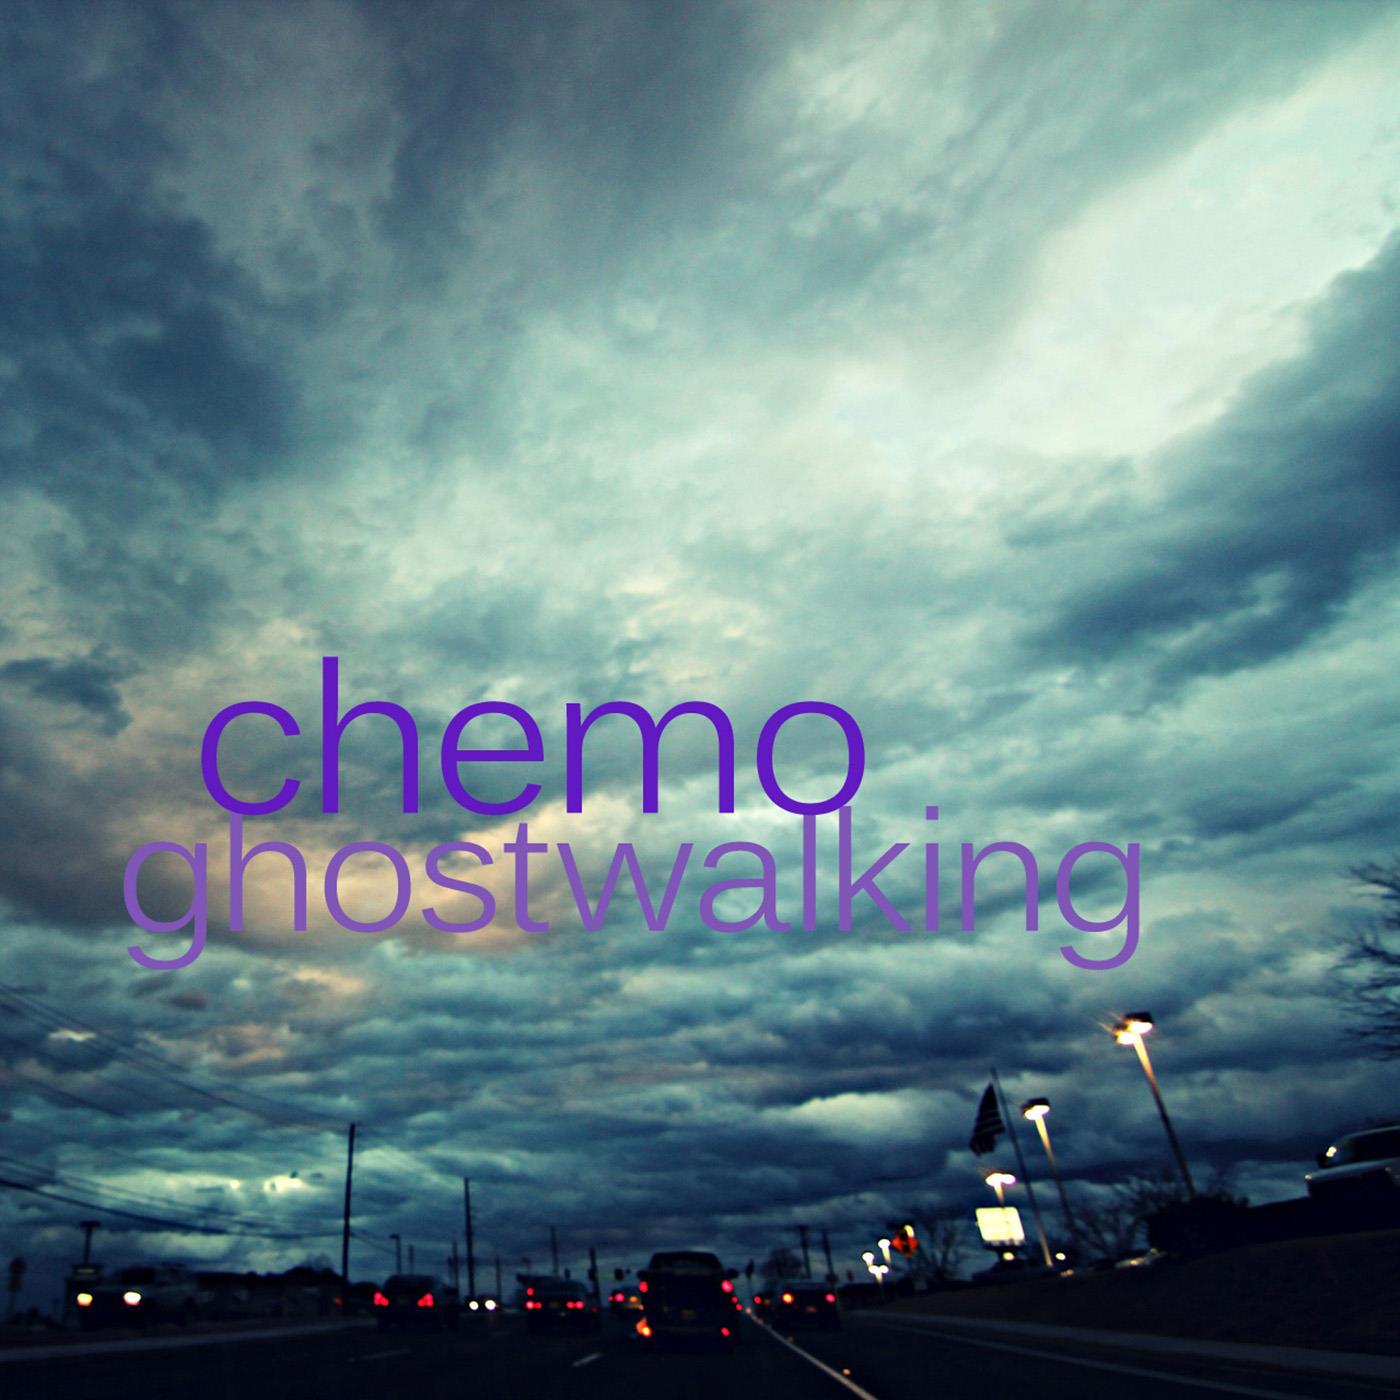 Ghostwalking